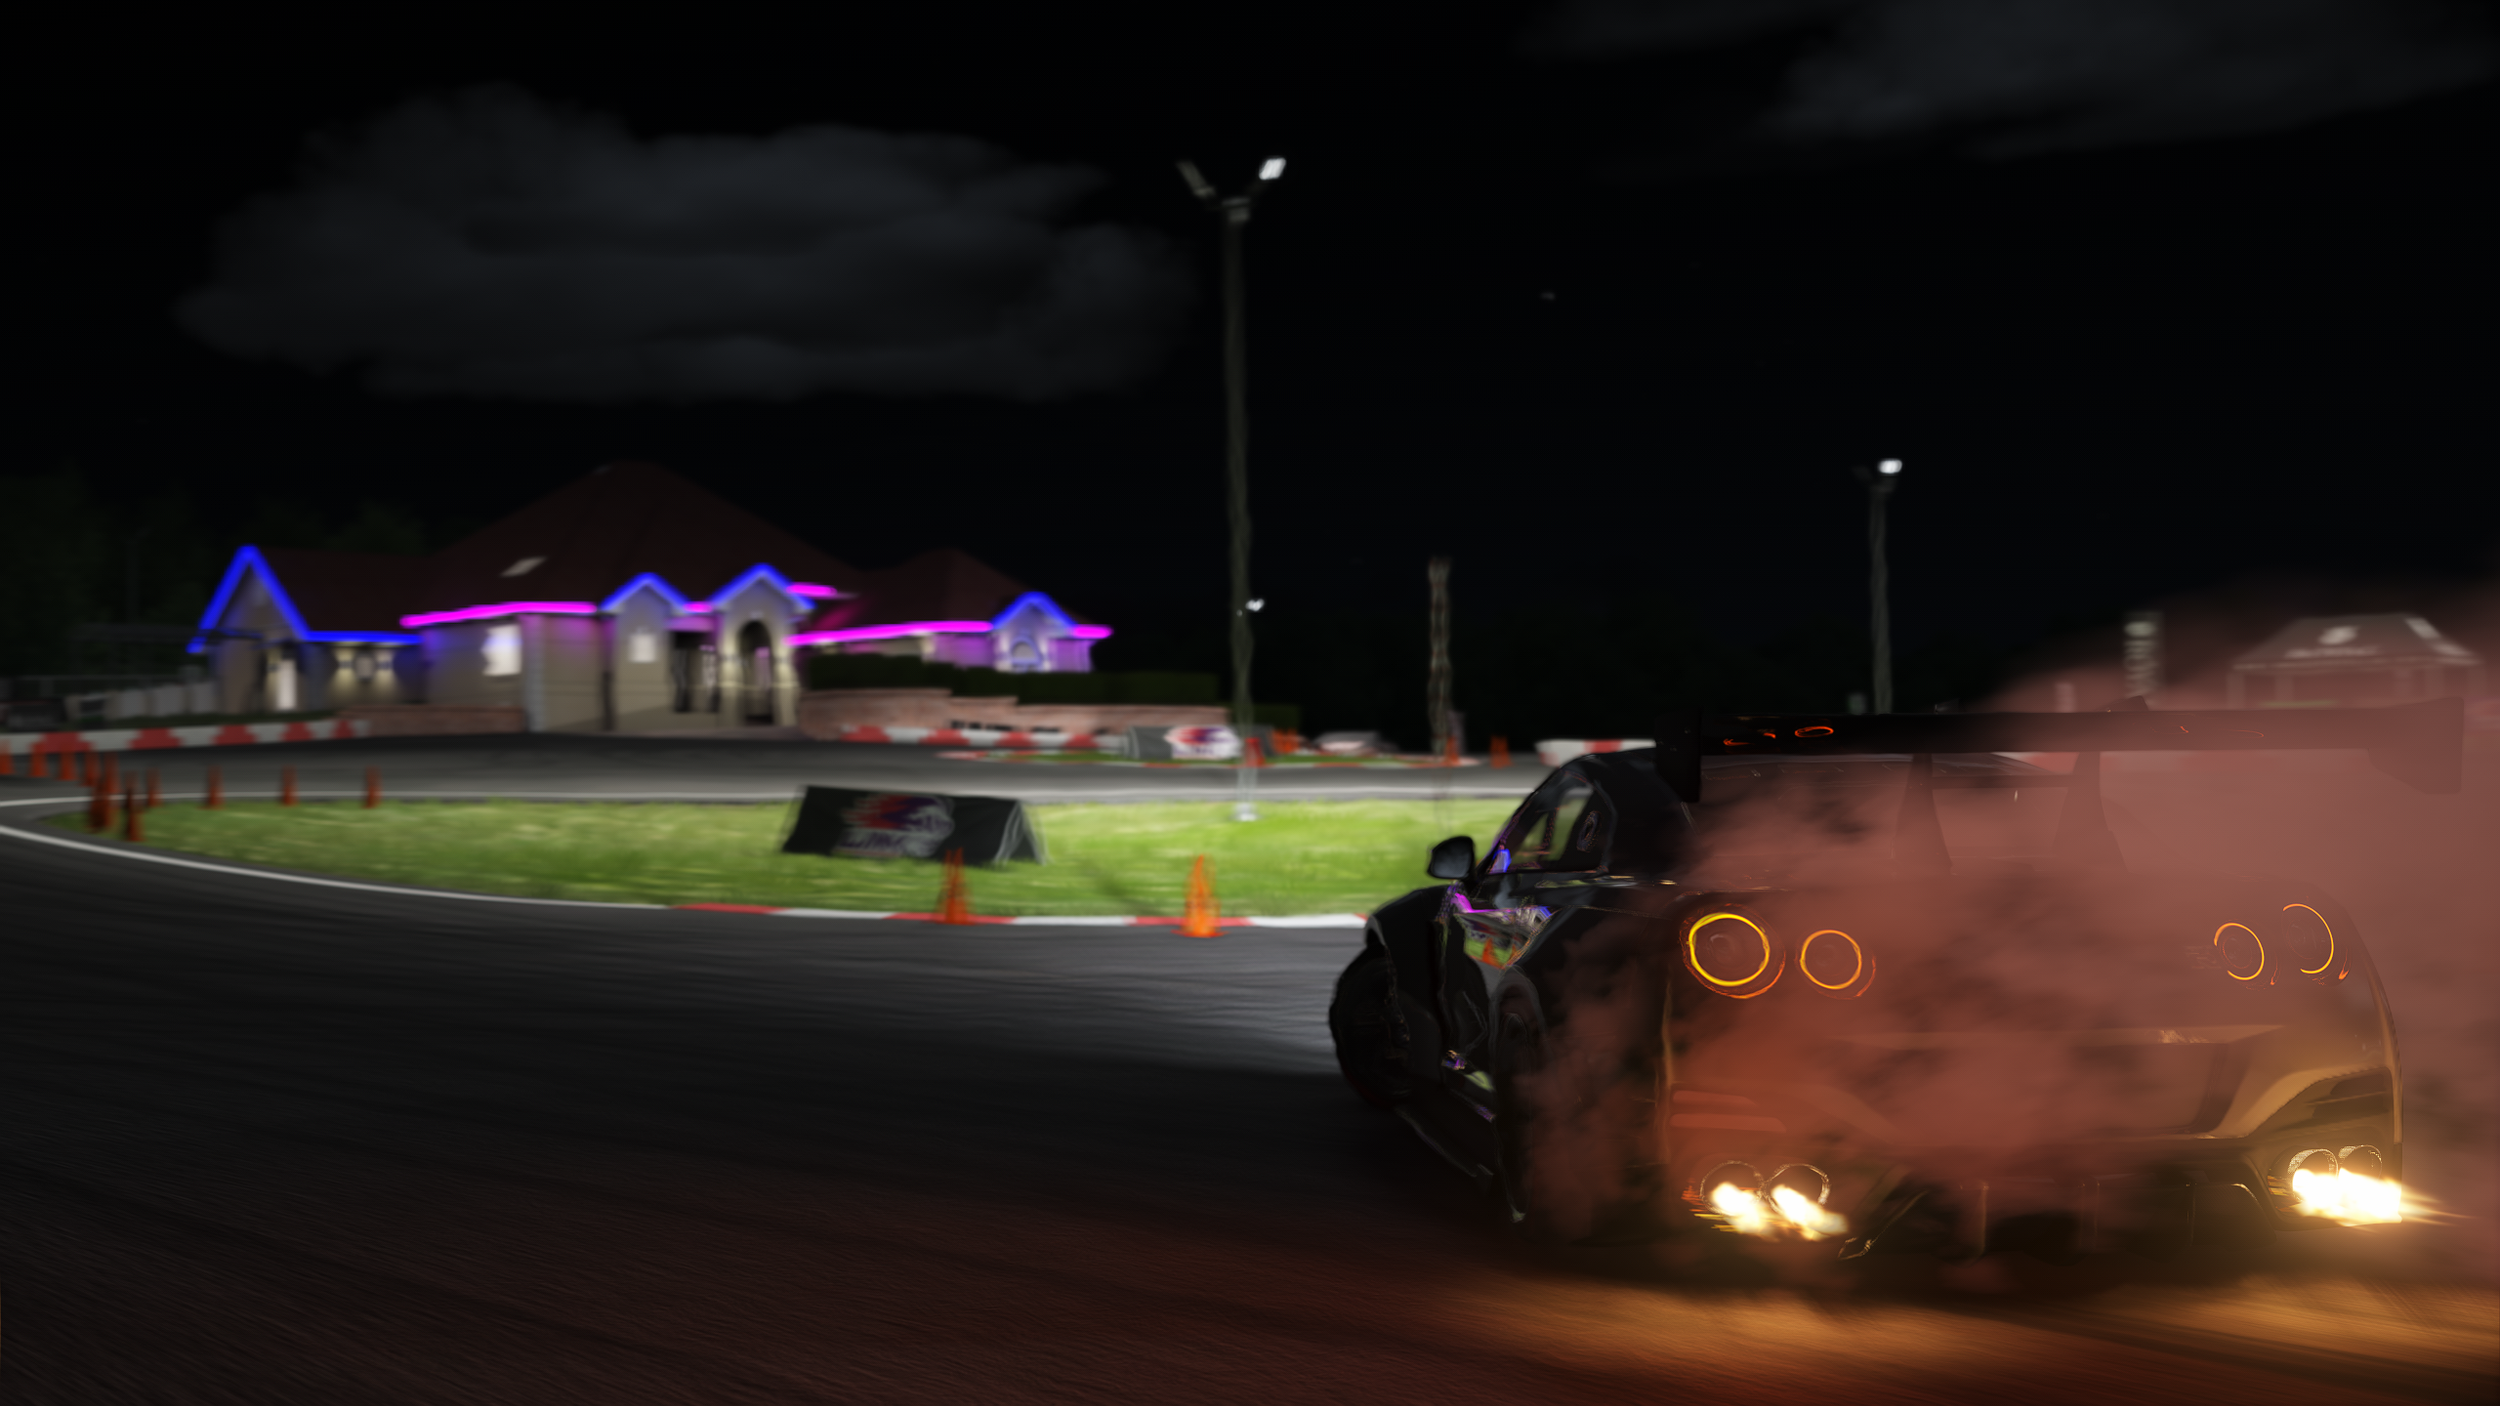 JDM Drift Car at Night